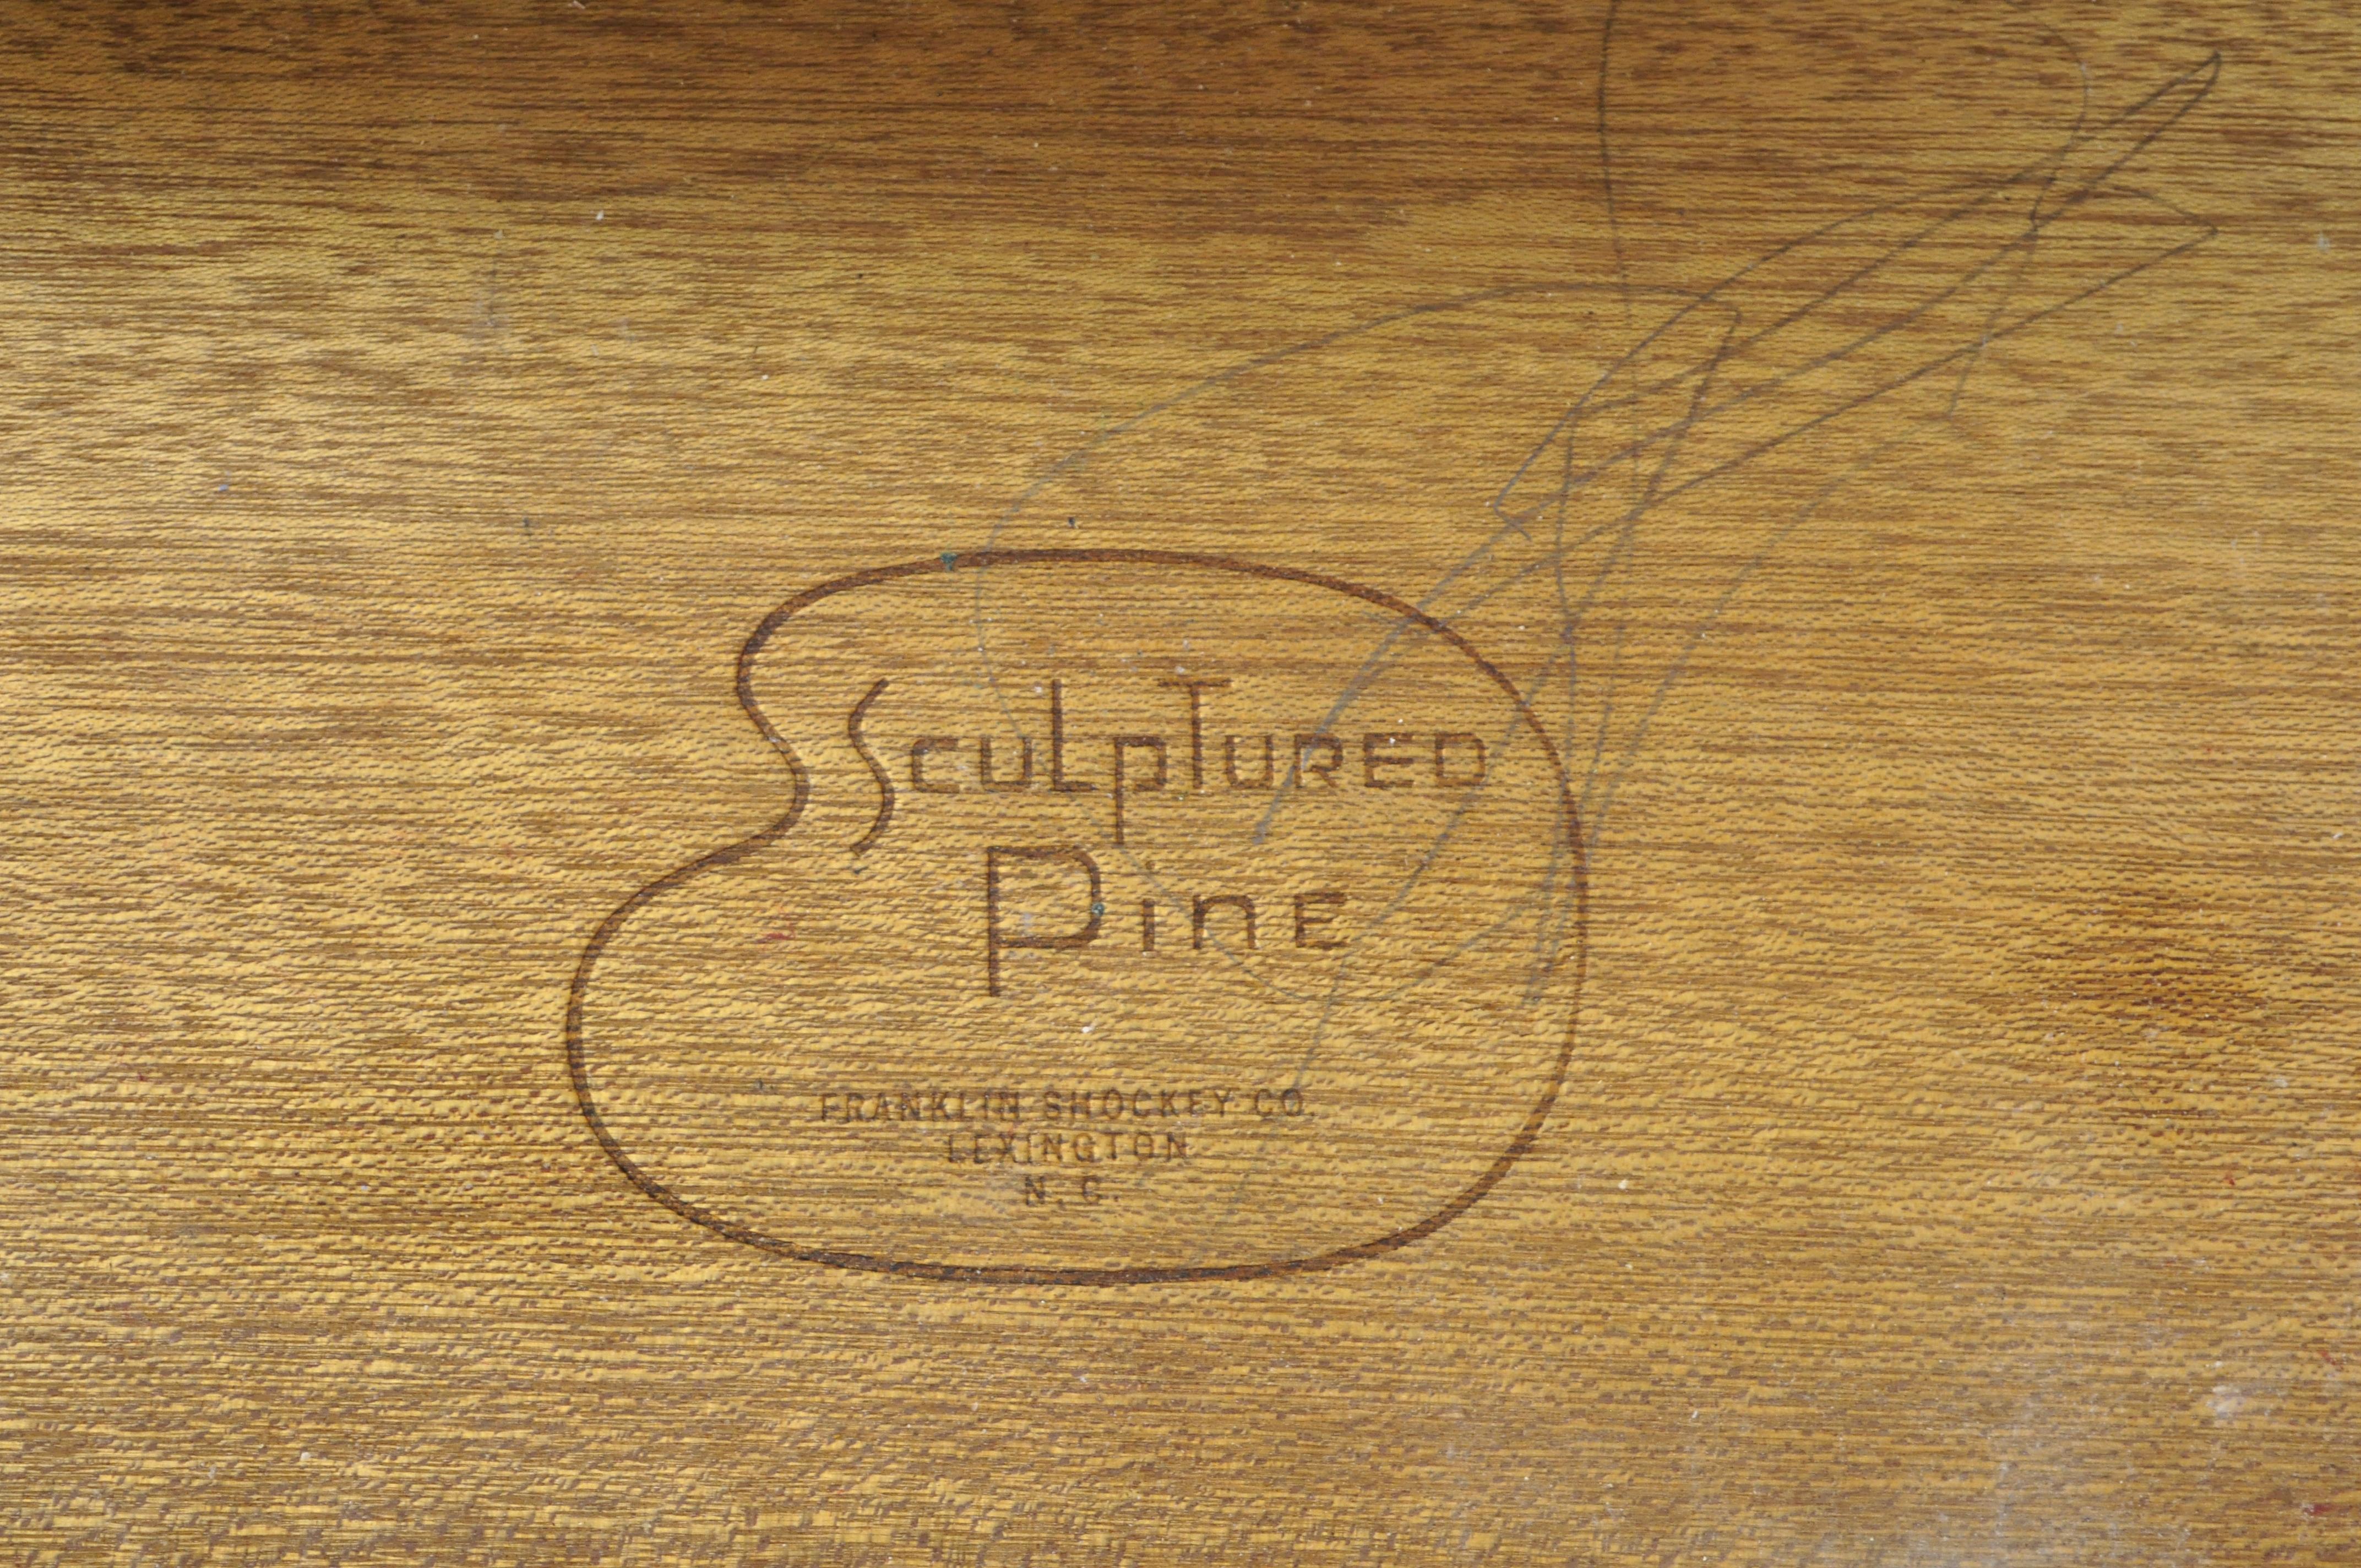 Midcentury Franklin Shockey Sculptured Pine One-Drawer Nightstand Bedside Table 1